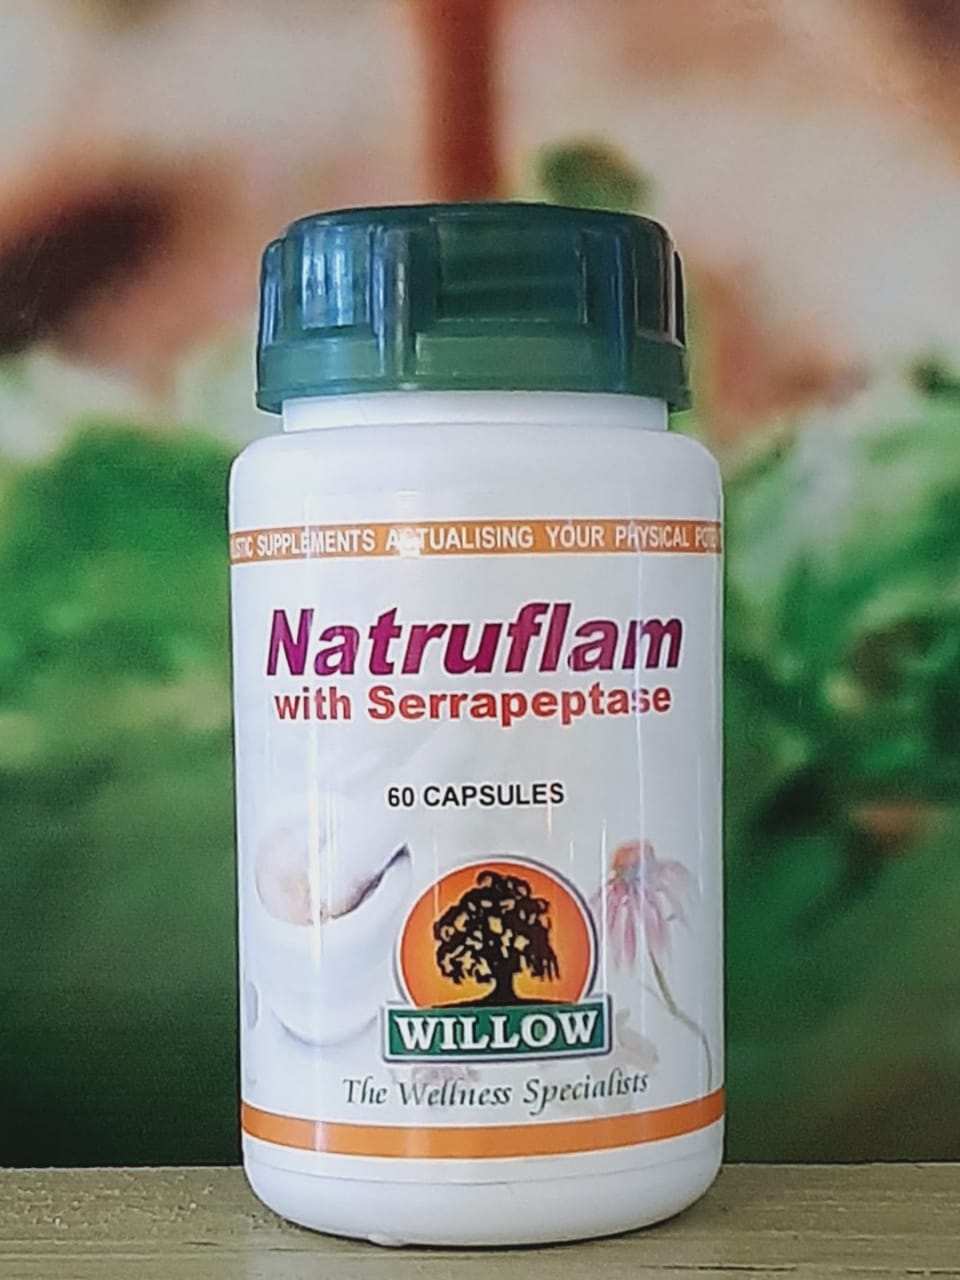 Willow Natruflam (with Serrapeptase) 60 capsules